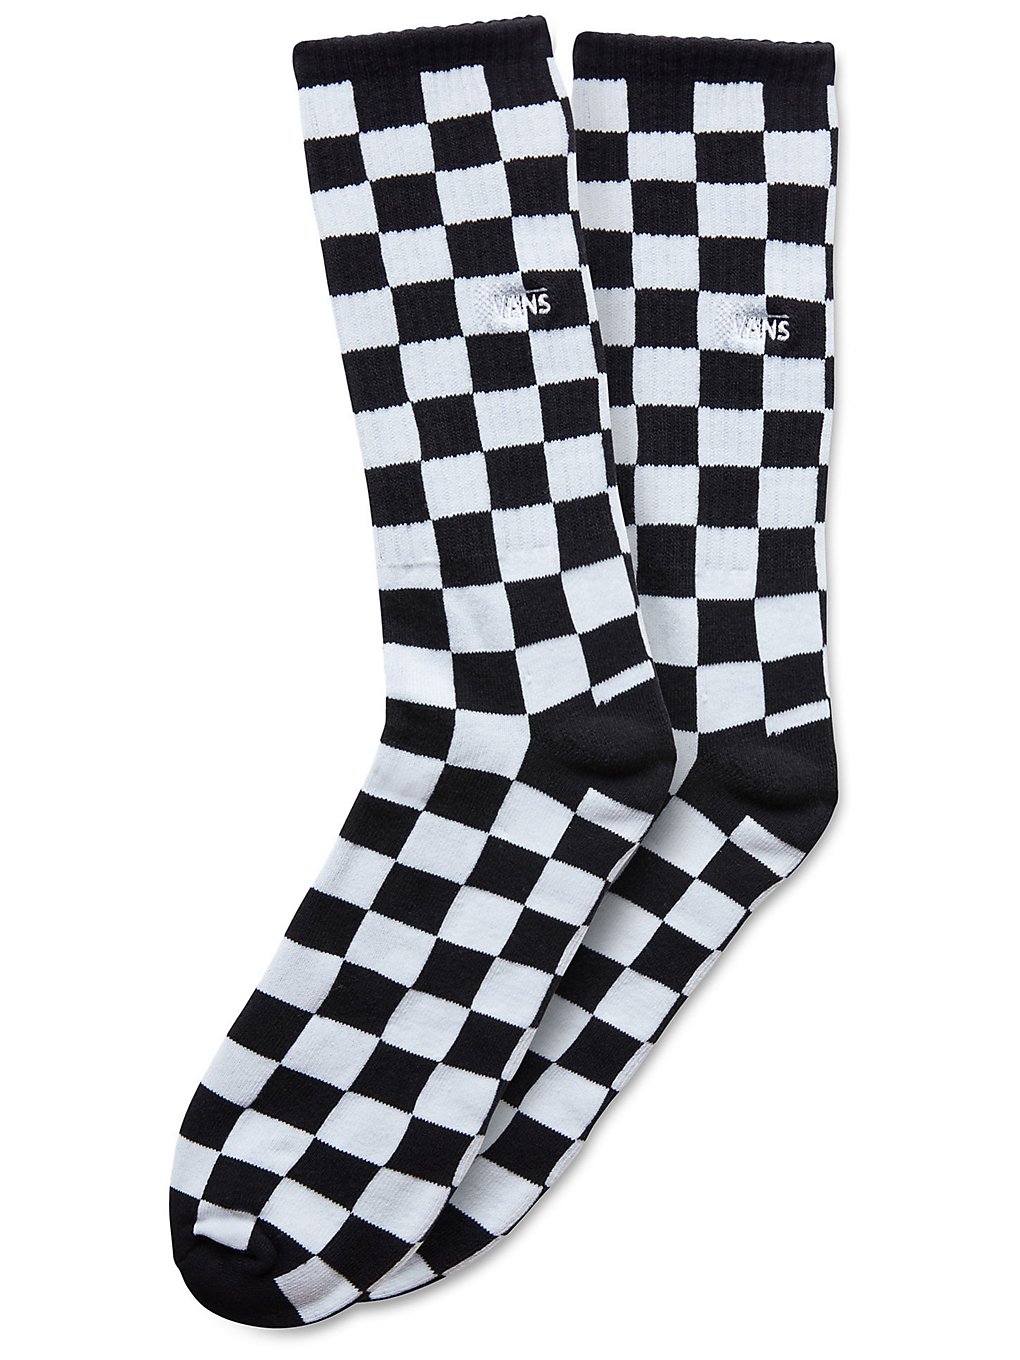 Vans Checkerboard II Crew (9.5-13) Socks noir